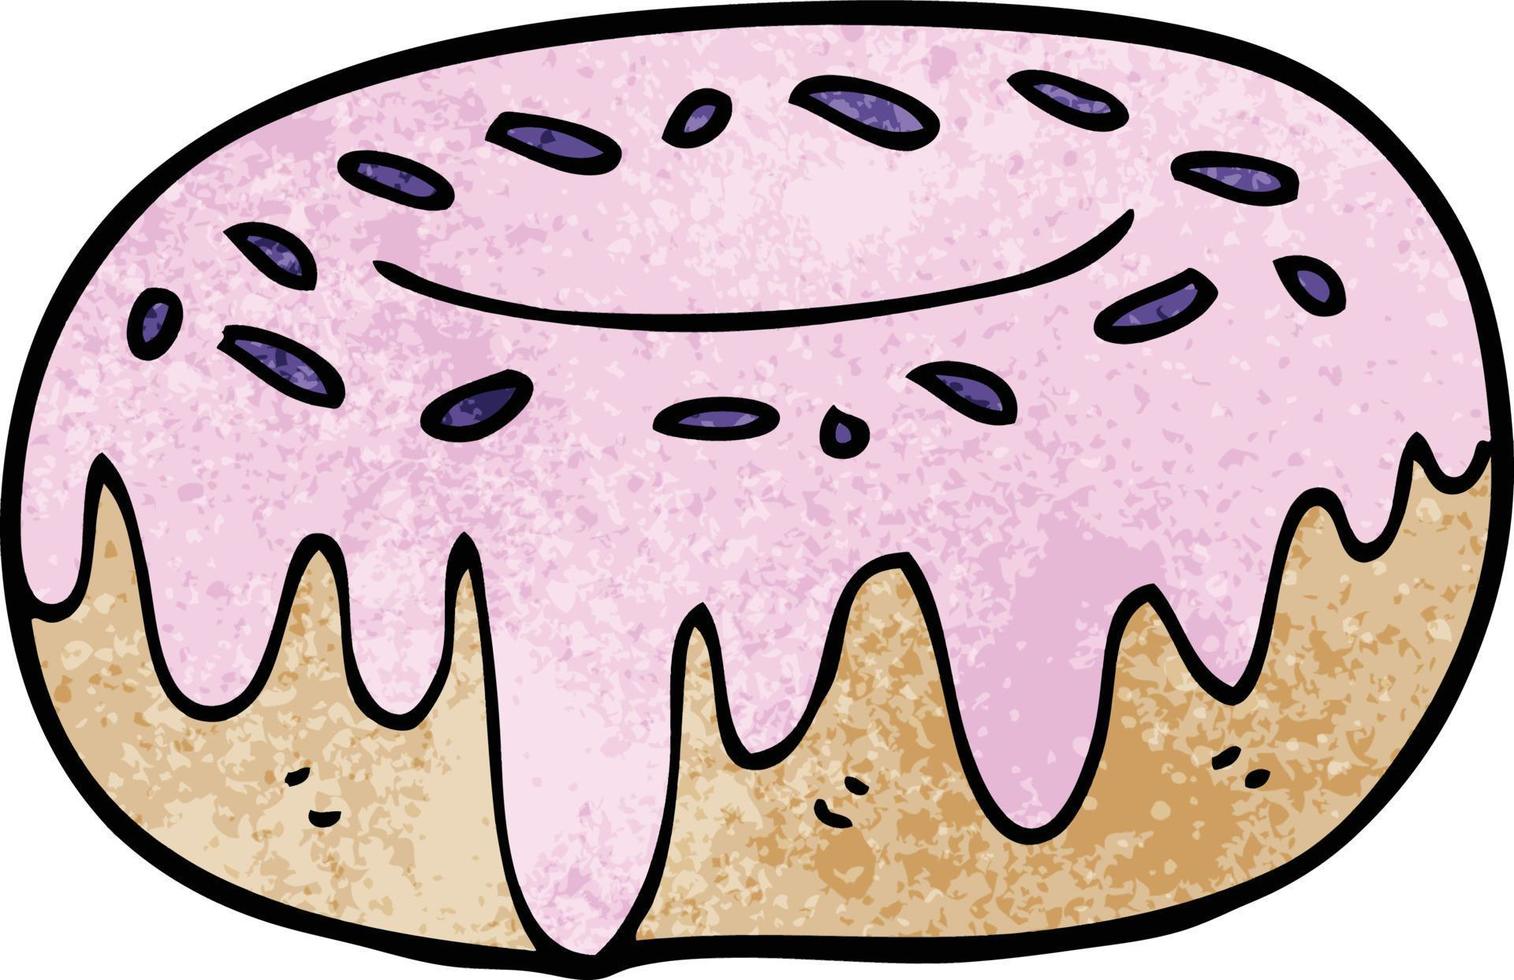 cartoon doodle donut with sprinkles vector